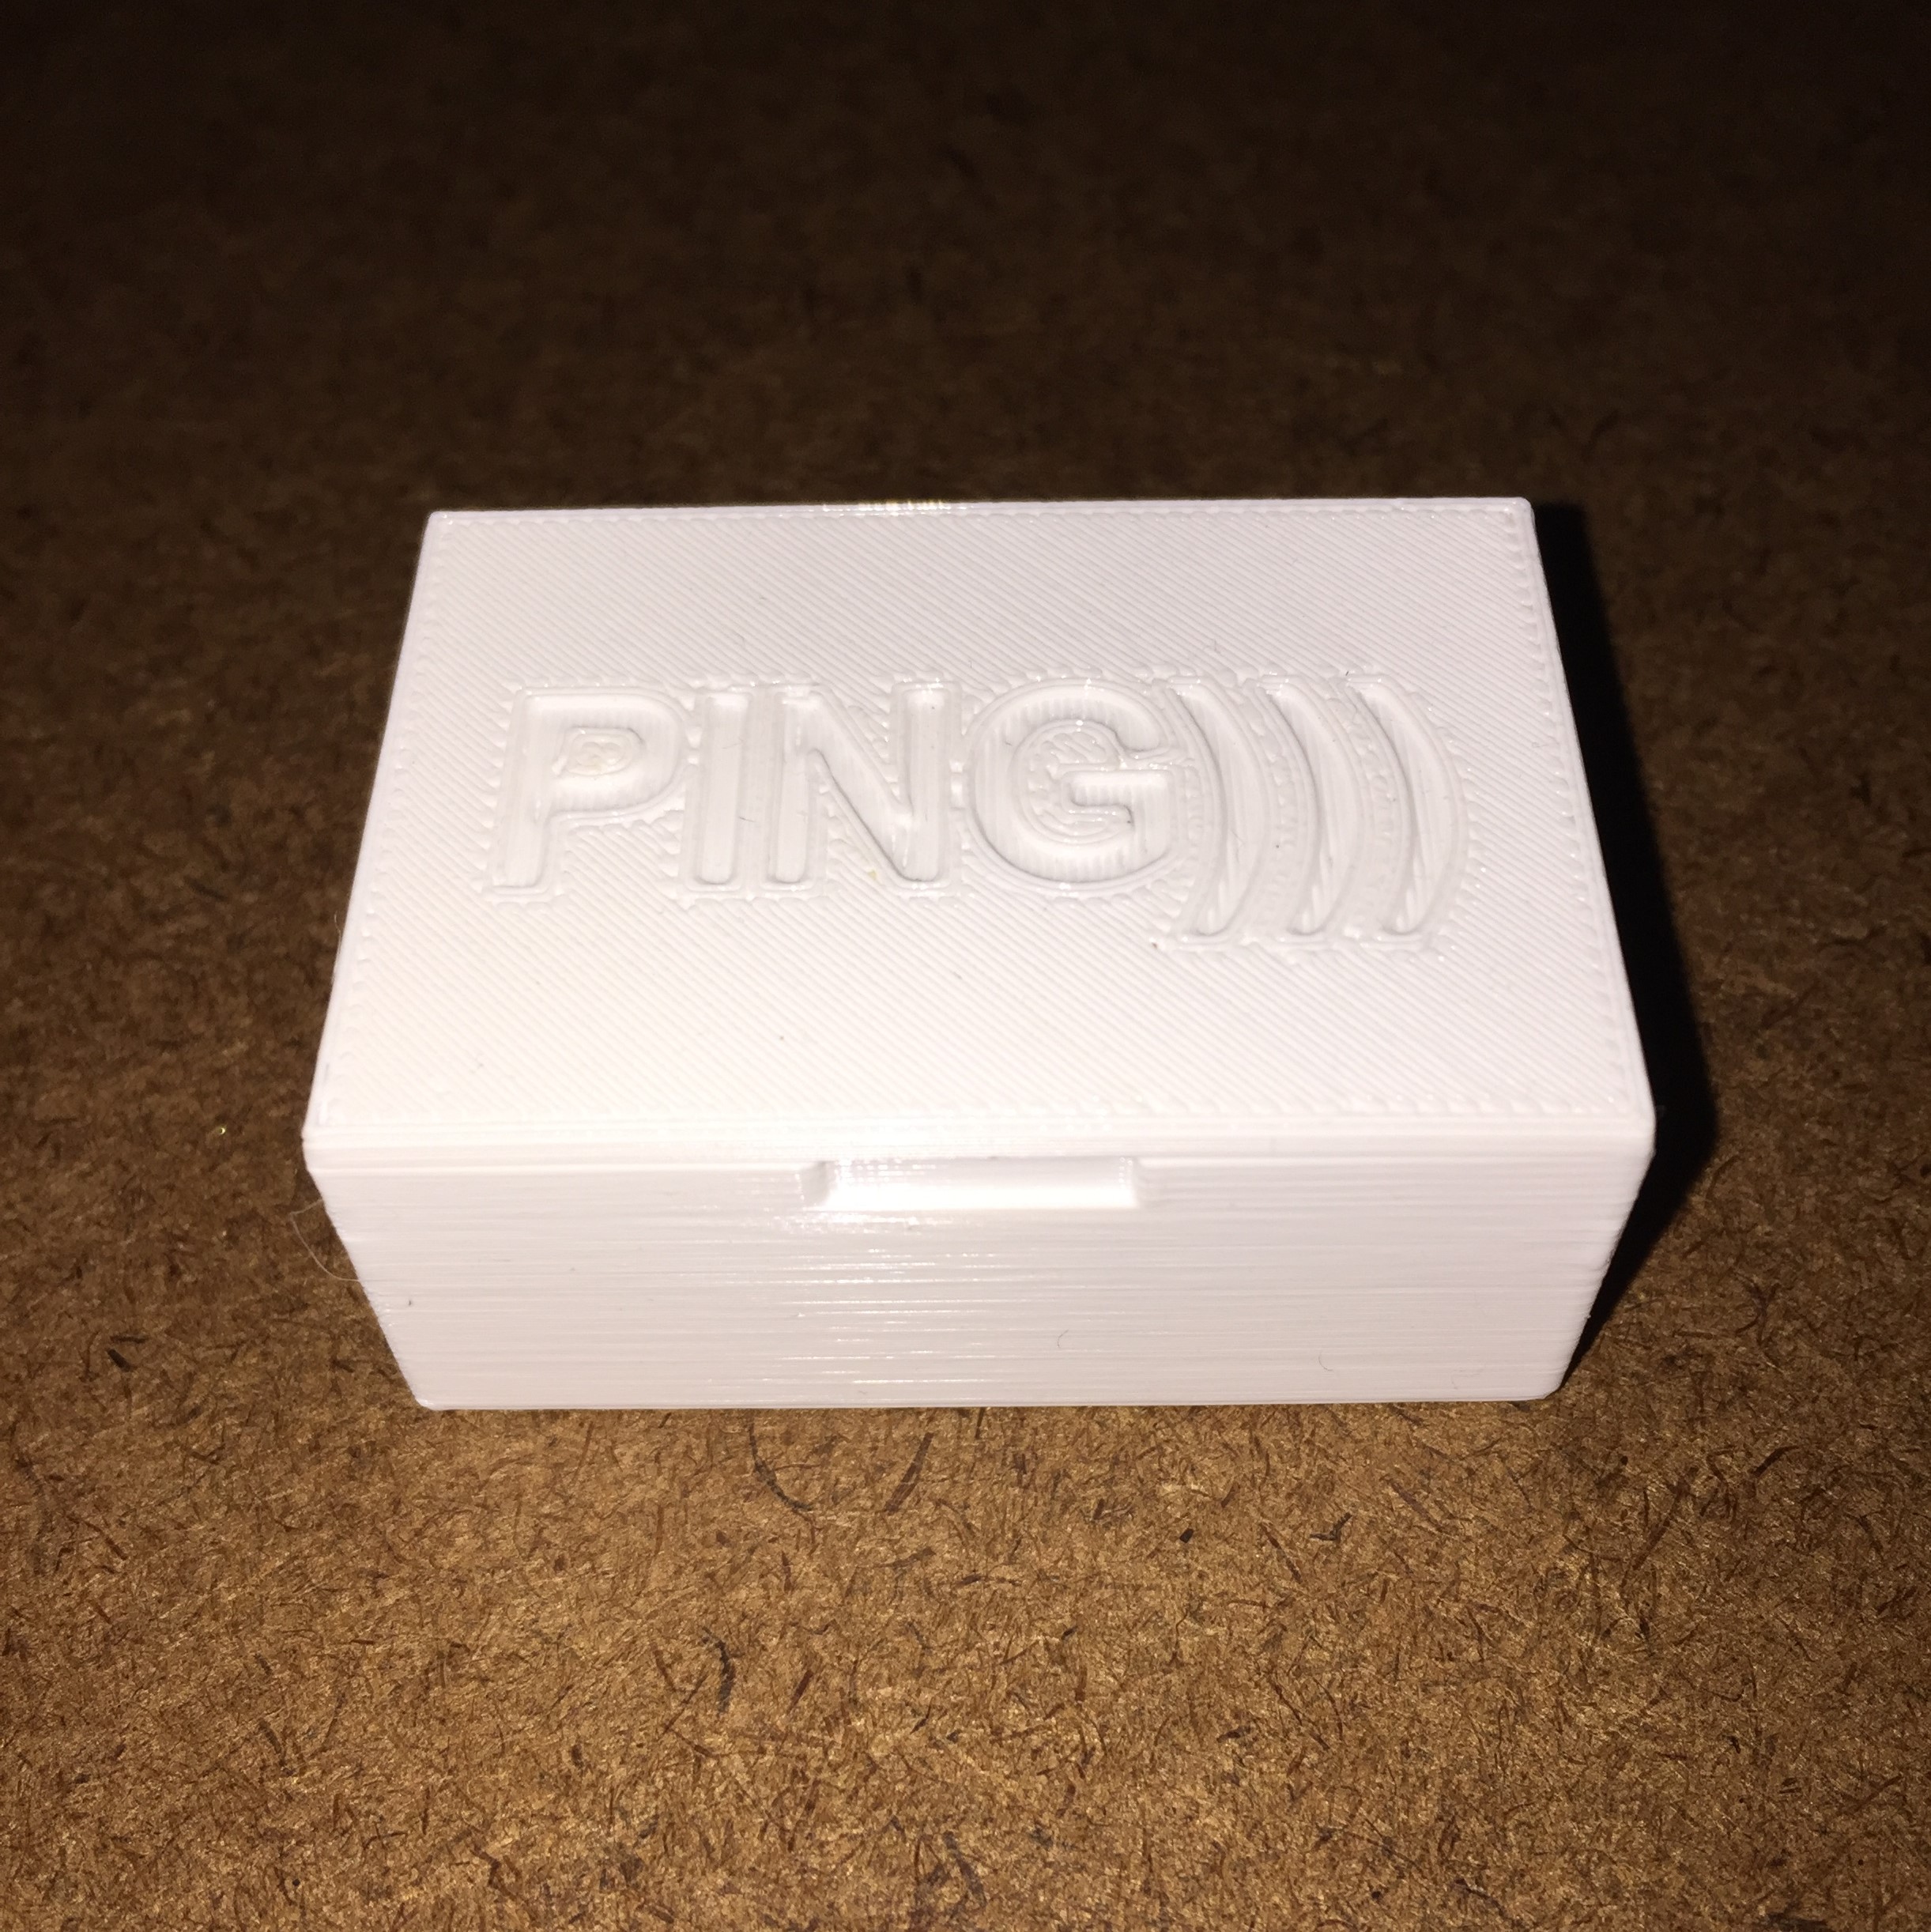 PING))) Storage Box